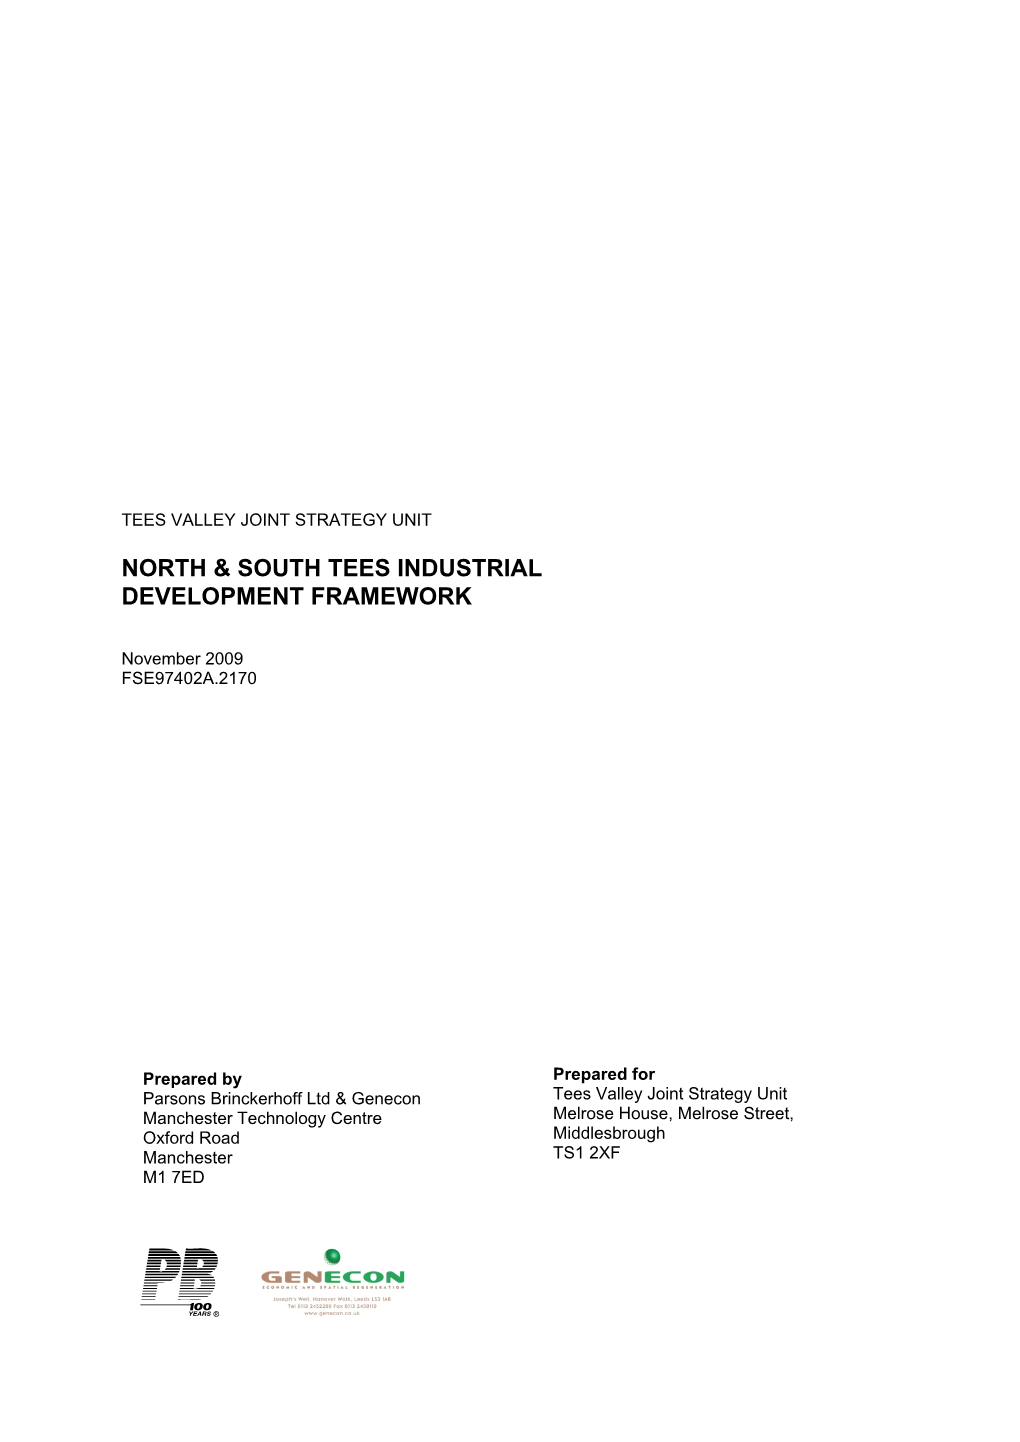 North & South Tees Industrial Development Framework